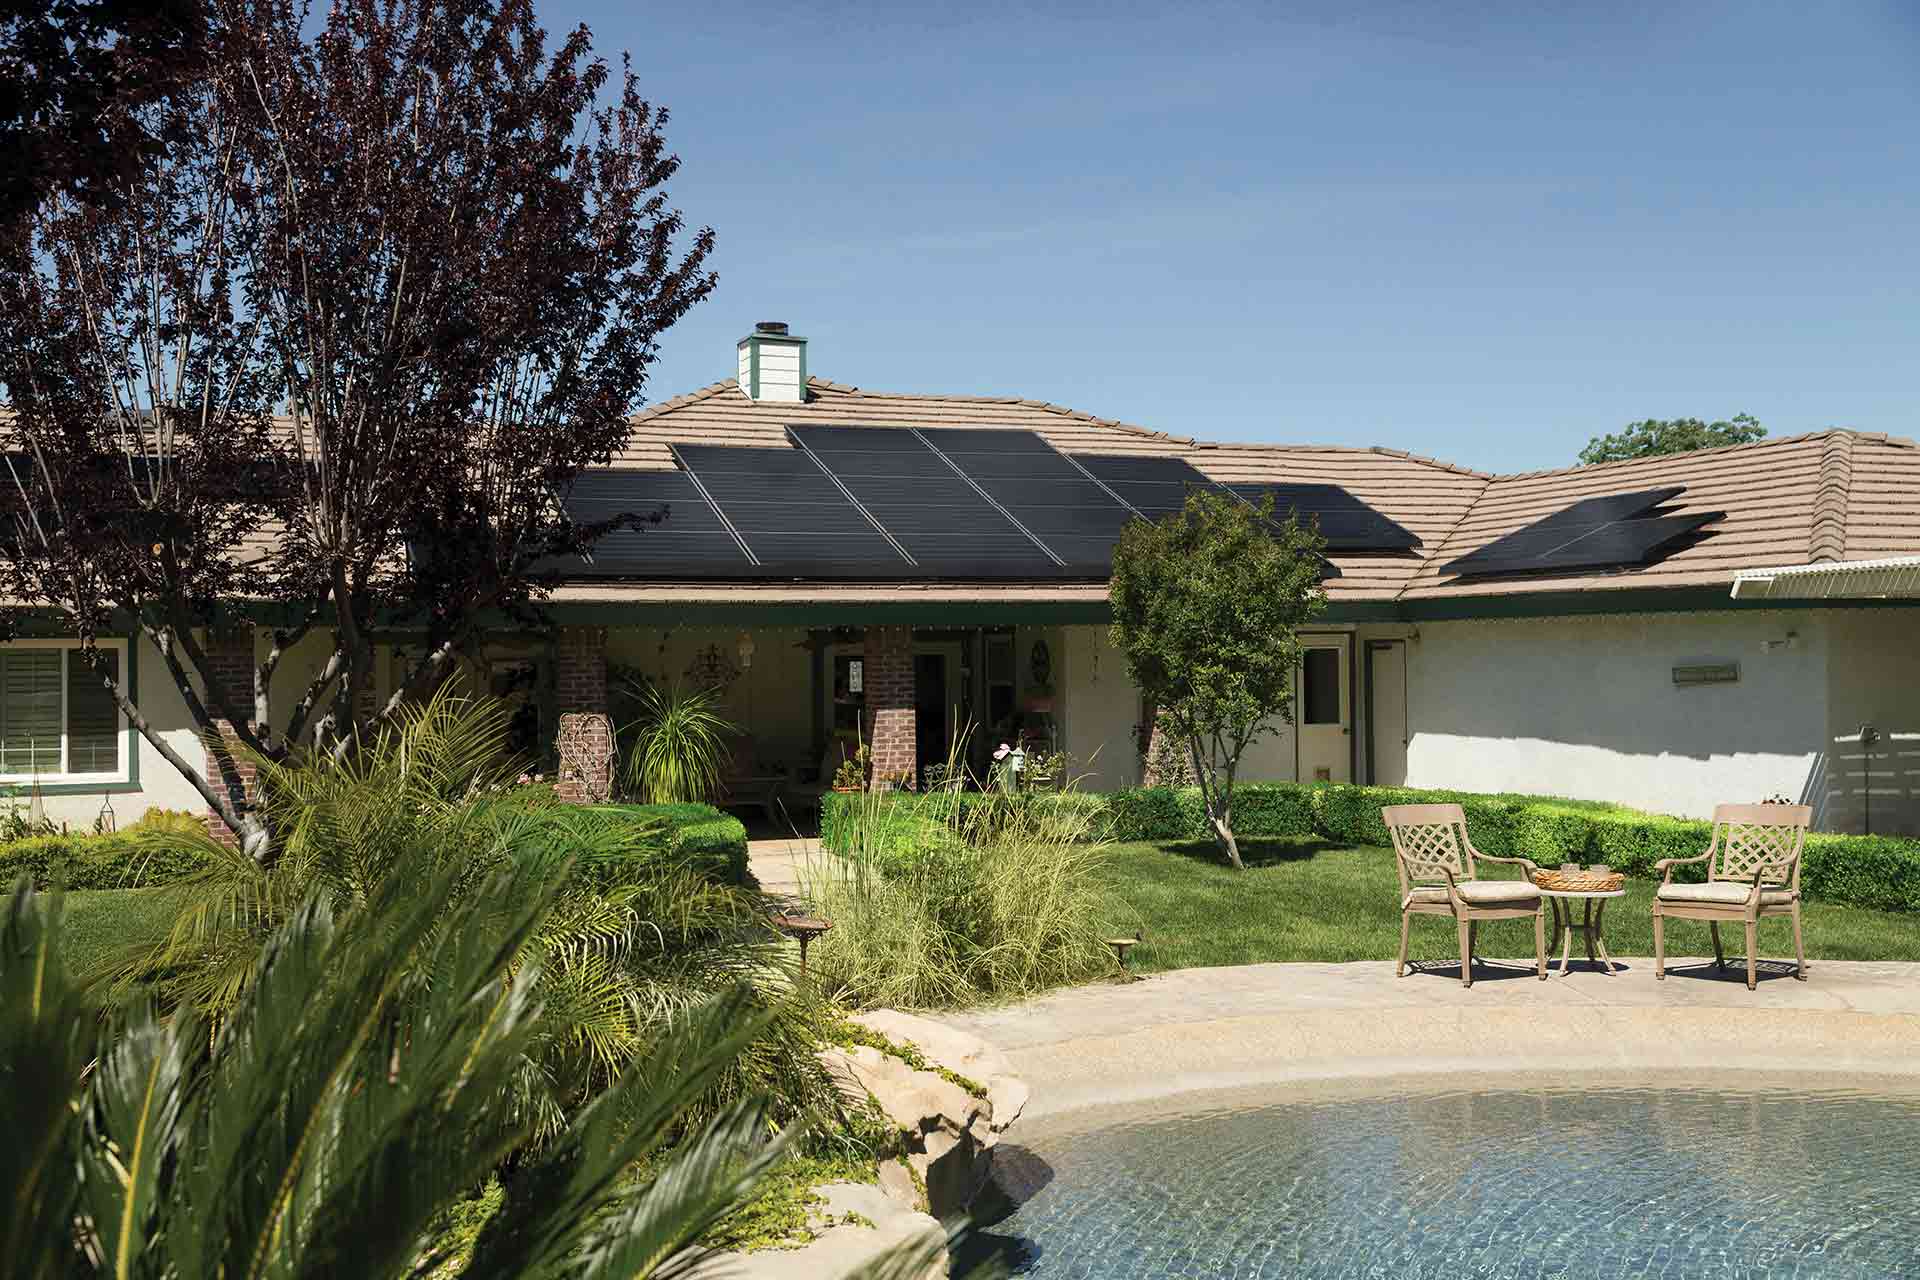 solar-panels-on-roof